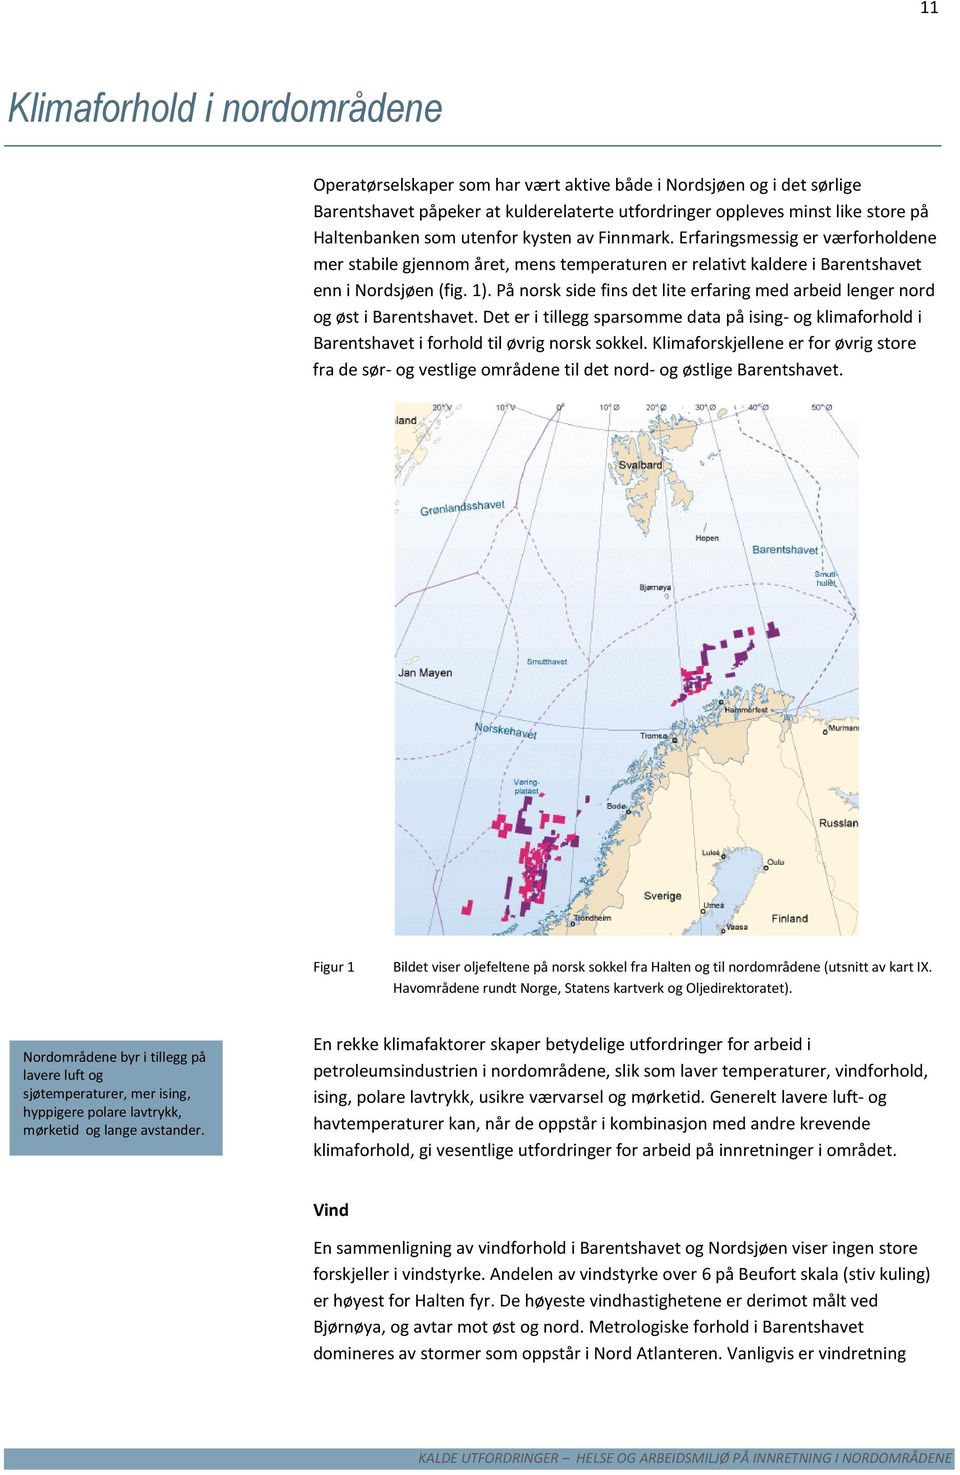 På norsk side fins det lite erfaring med arbeid lenger nord og øst i Barentshavet. Det er i tillegg sparsomme data på ising- og klimaforhold i Barentshavet i forhold til øvrig norsk sokkel.